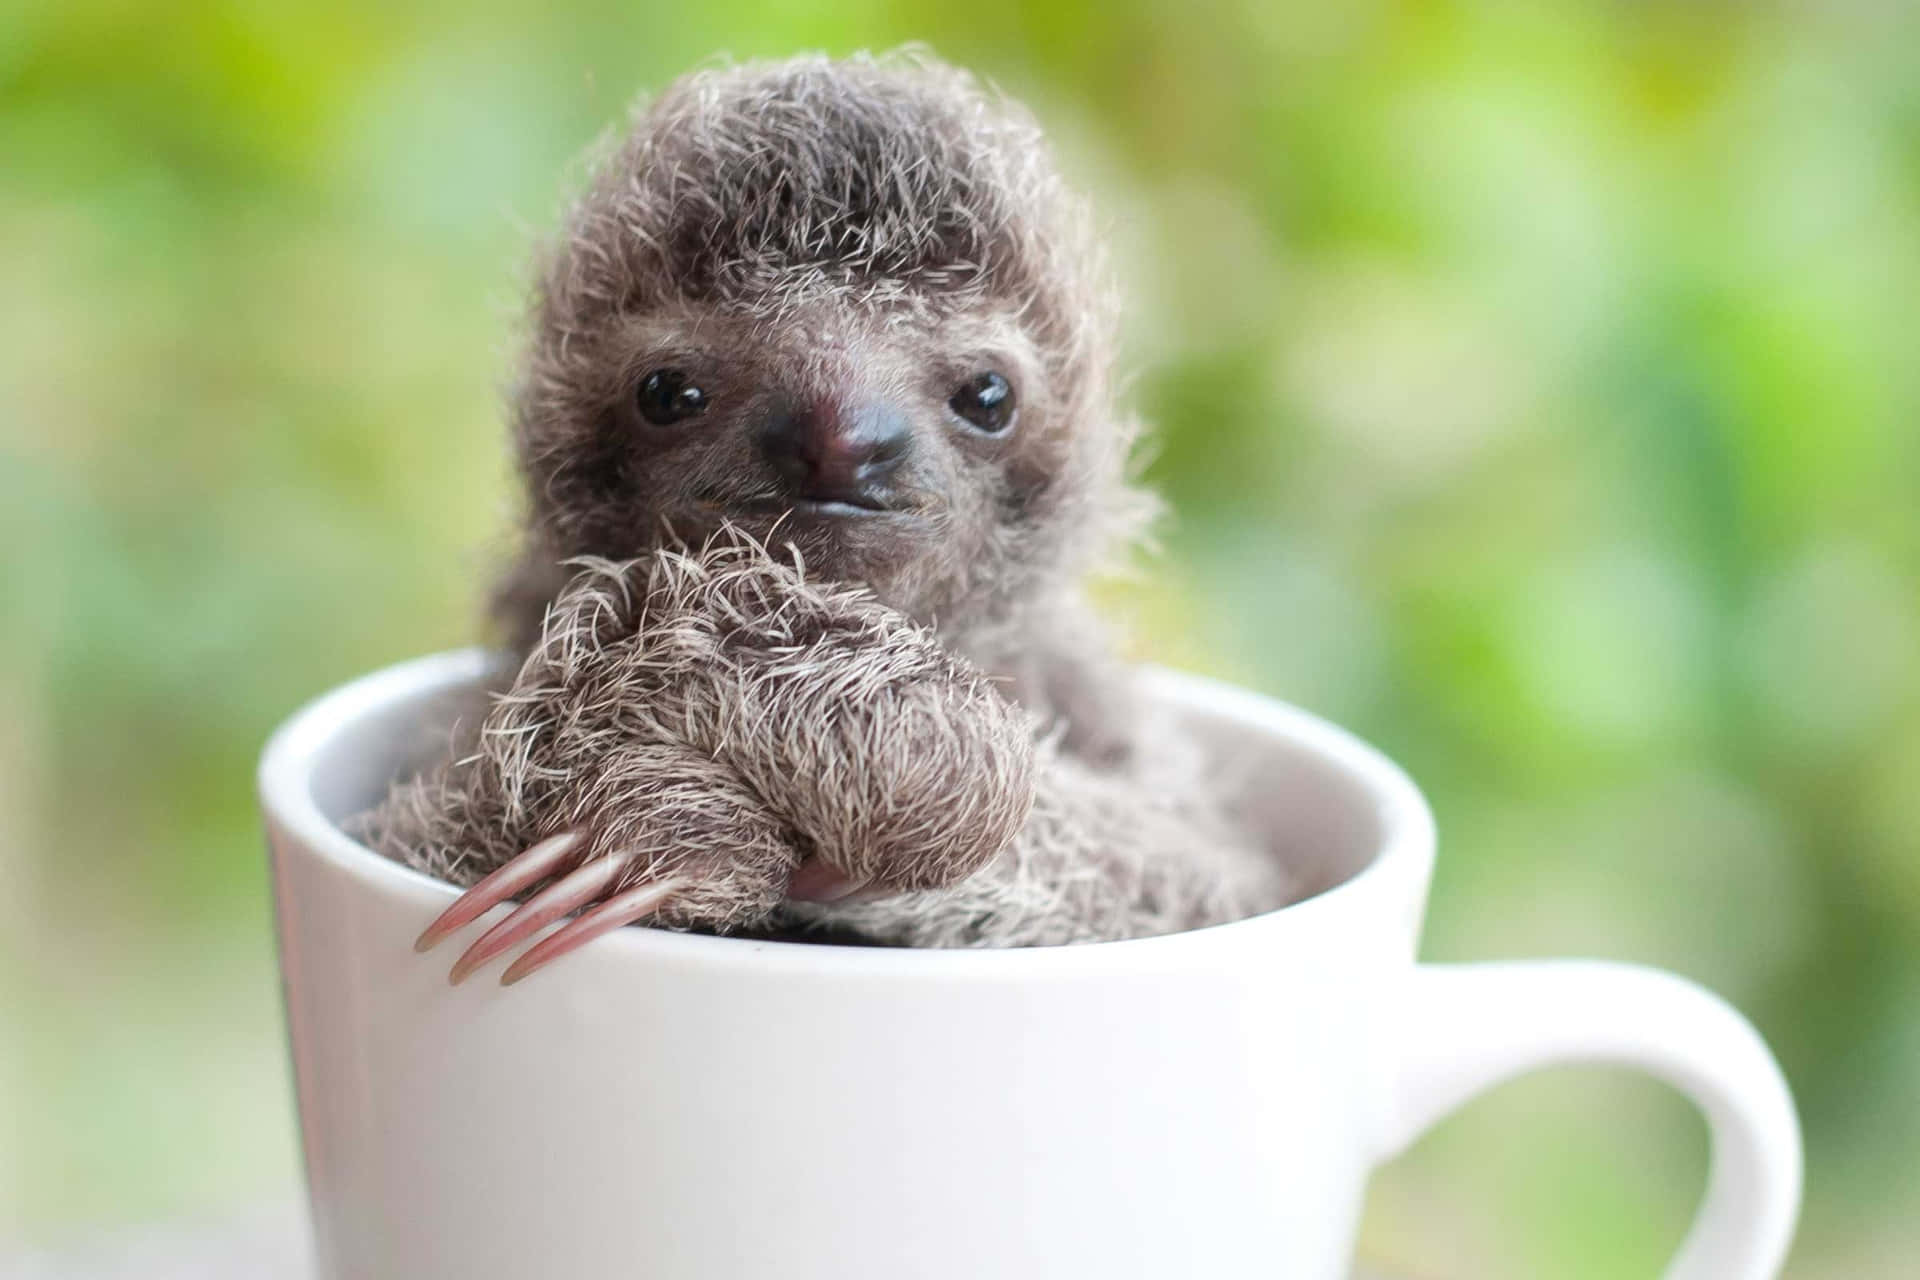 "Adorable Baby Sloth Cuddling a Blanket"